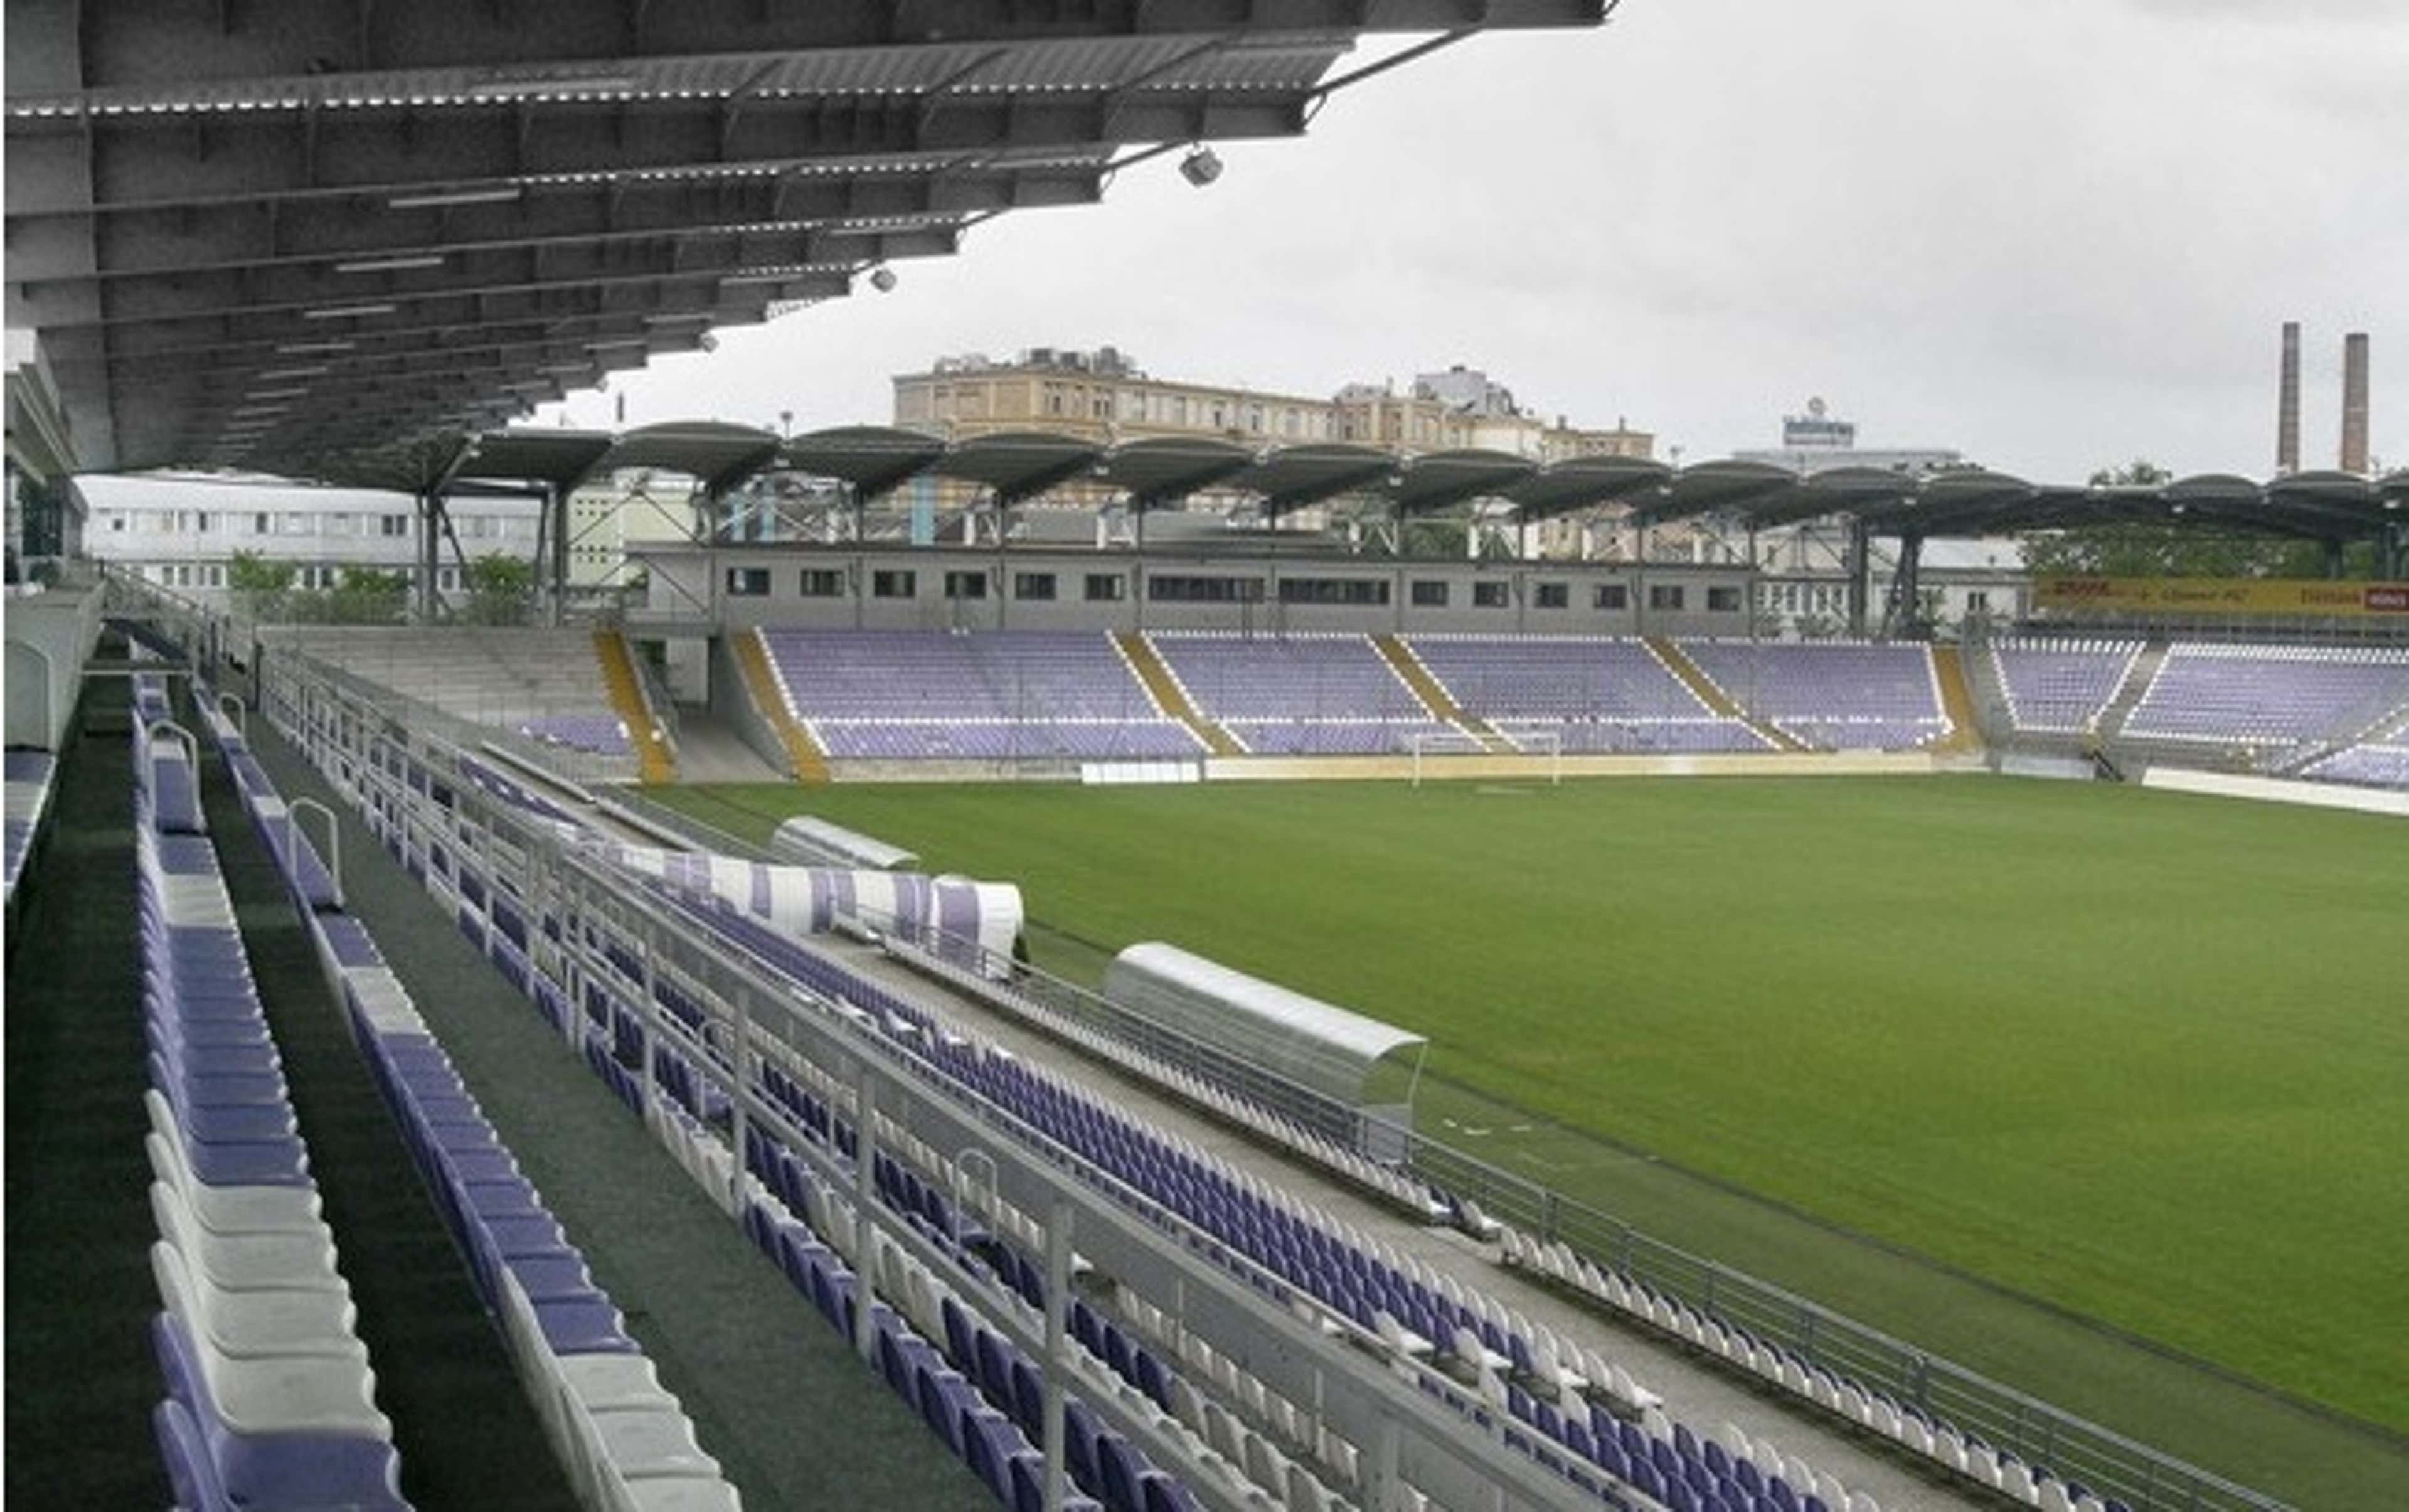 Szusza Ferenc Stadion